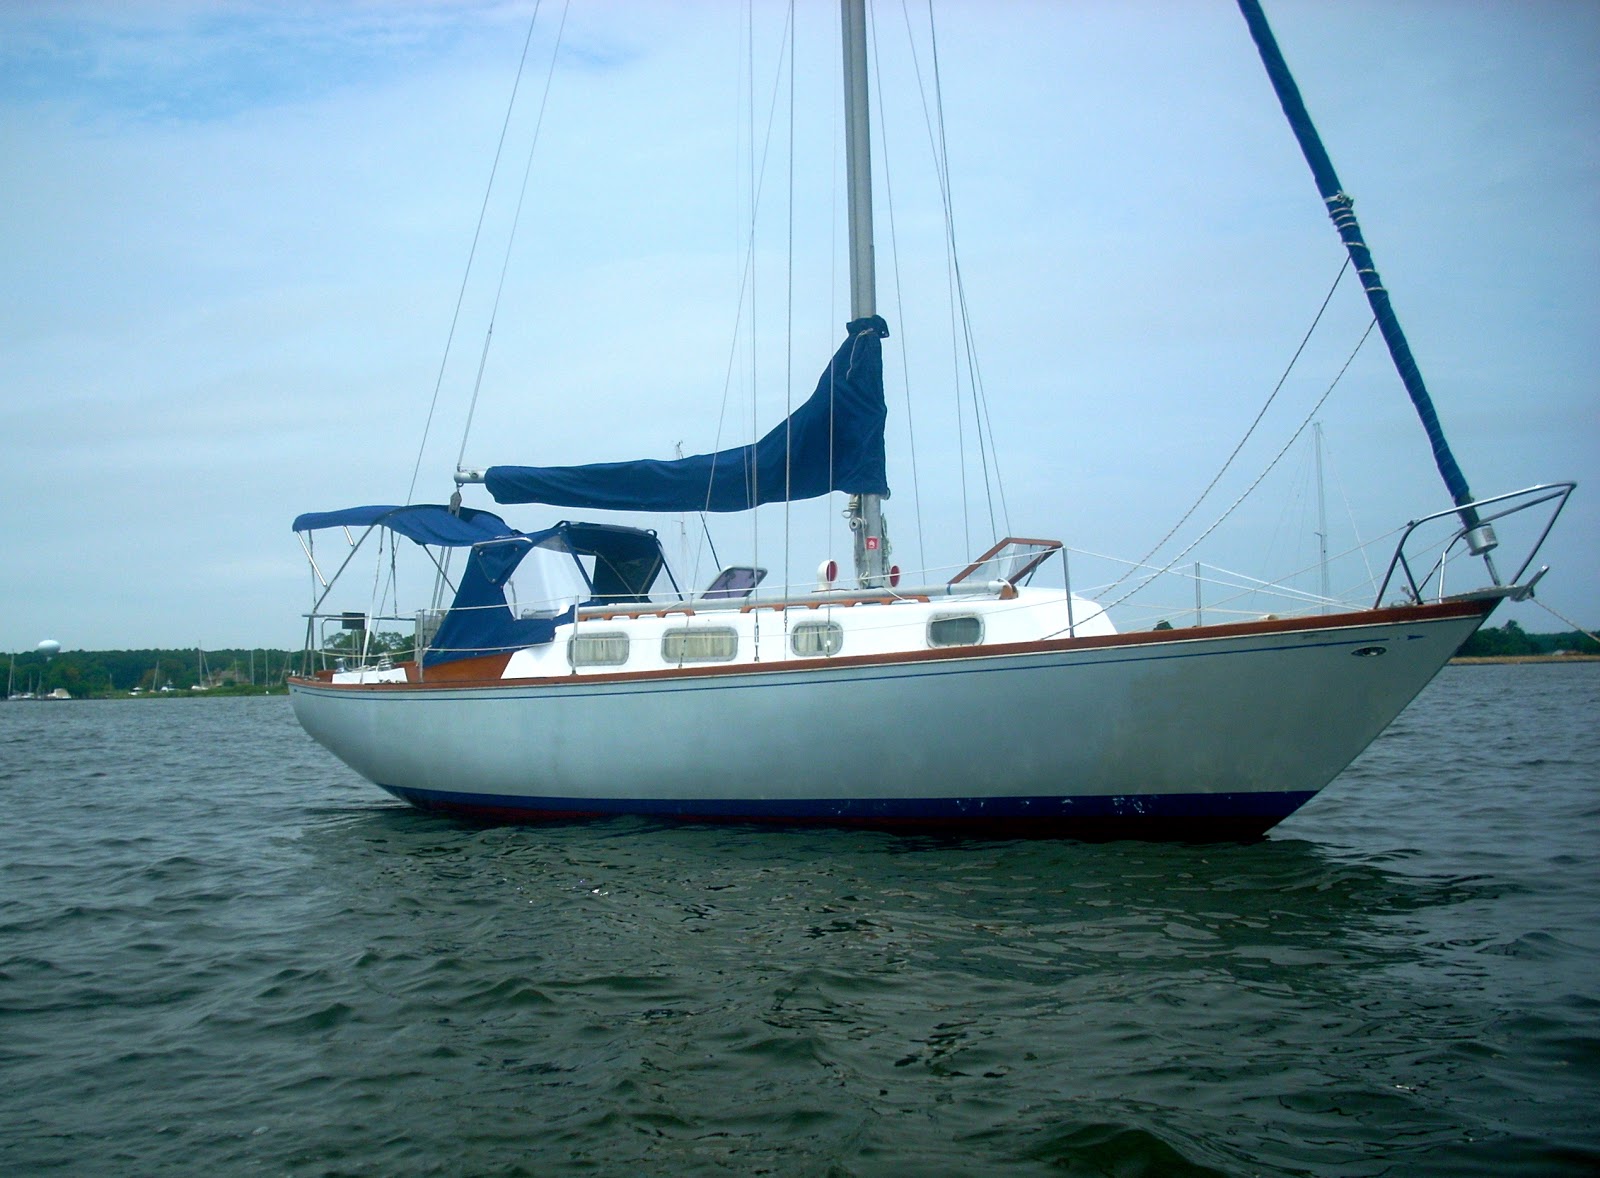 34 c&c sailboat for sale